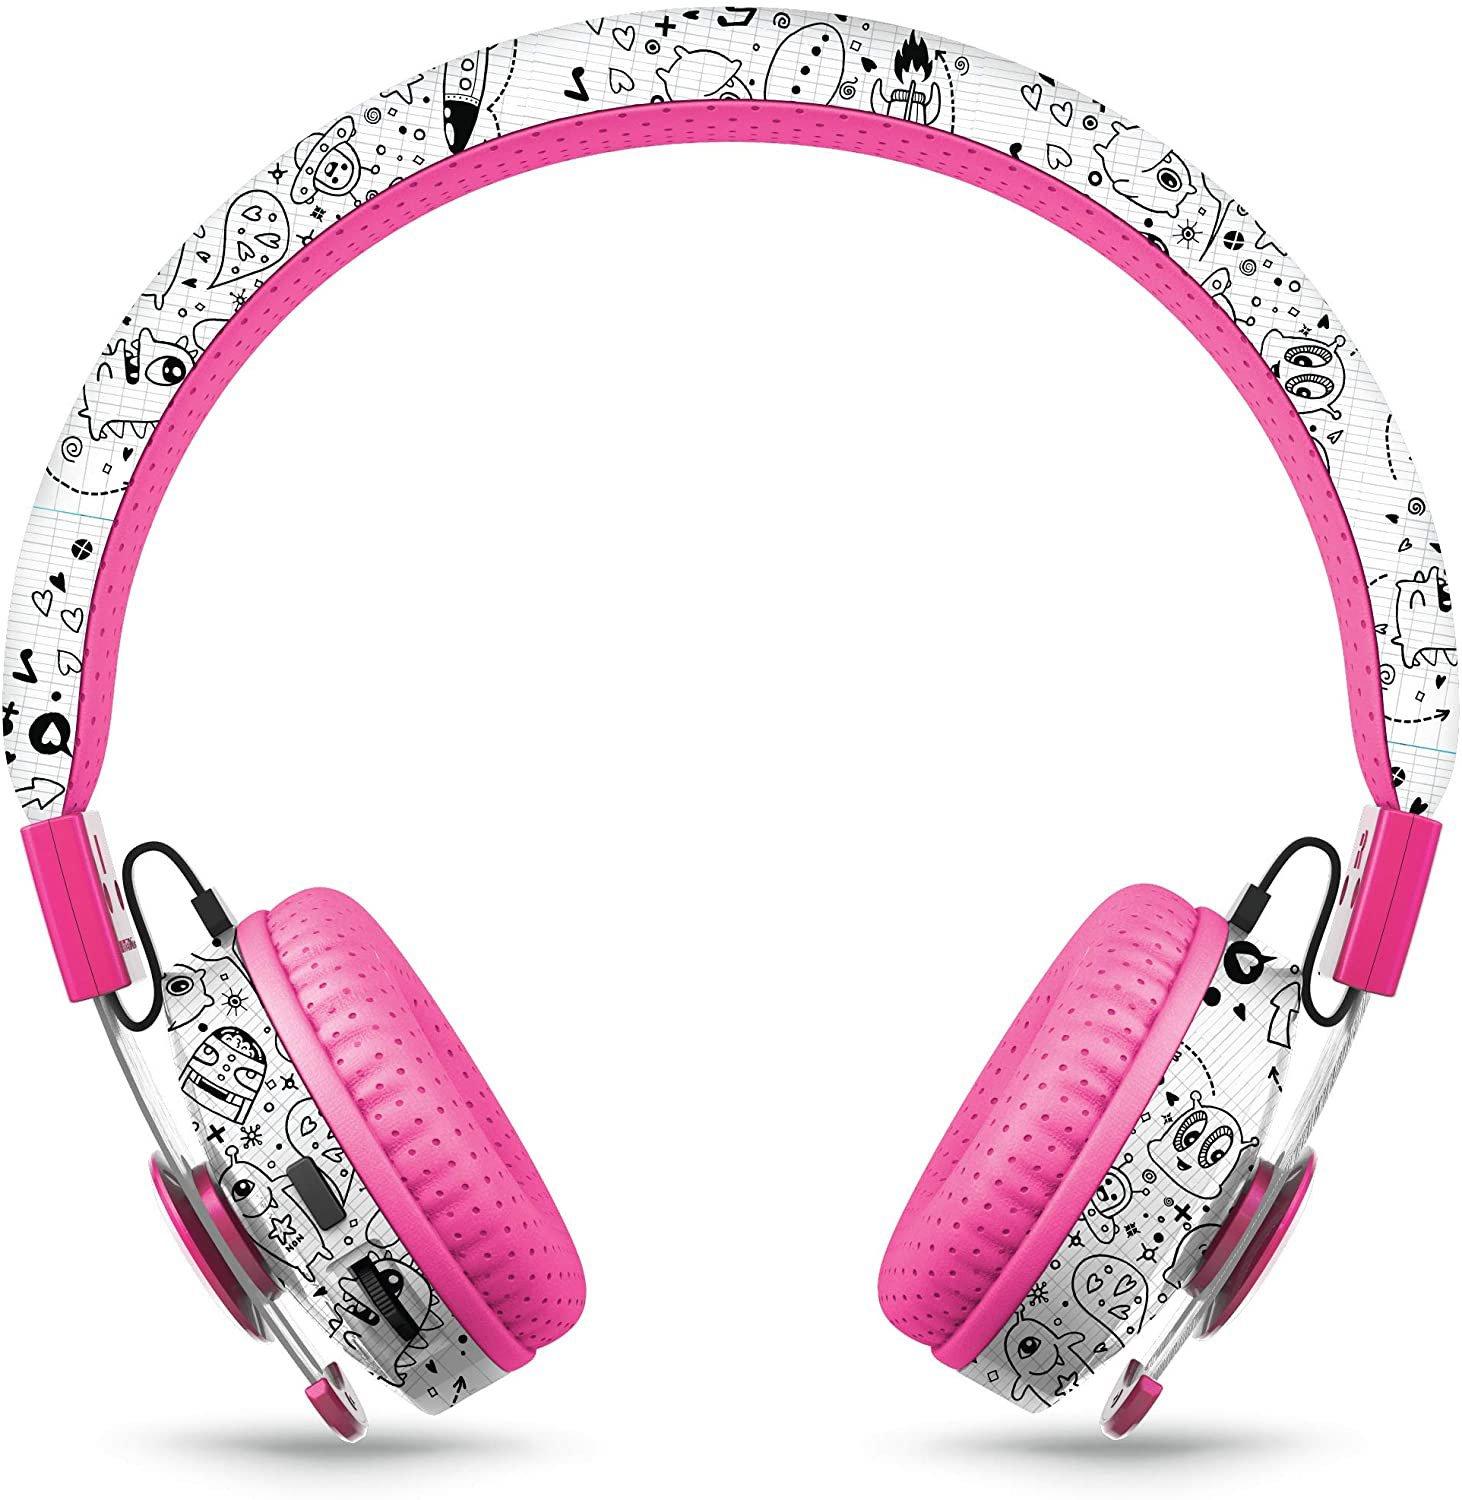 https://media.gamestop.com/i/gamestop/11172090_far-out-doodles/LilGadgets-Connect-Plus-Untangled-Pro-Wireless-Volume-Limited-Kids-Over-Ear-Headphones-far-out-doodles